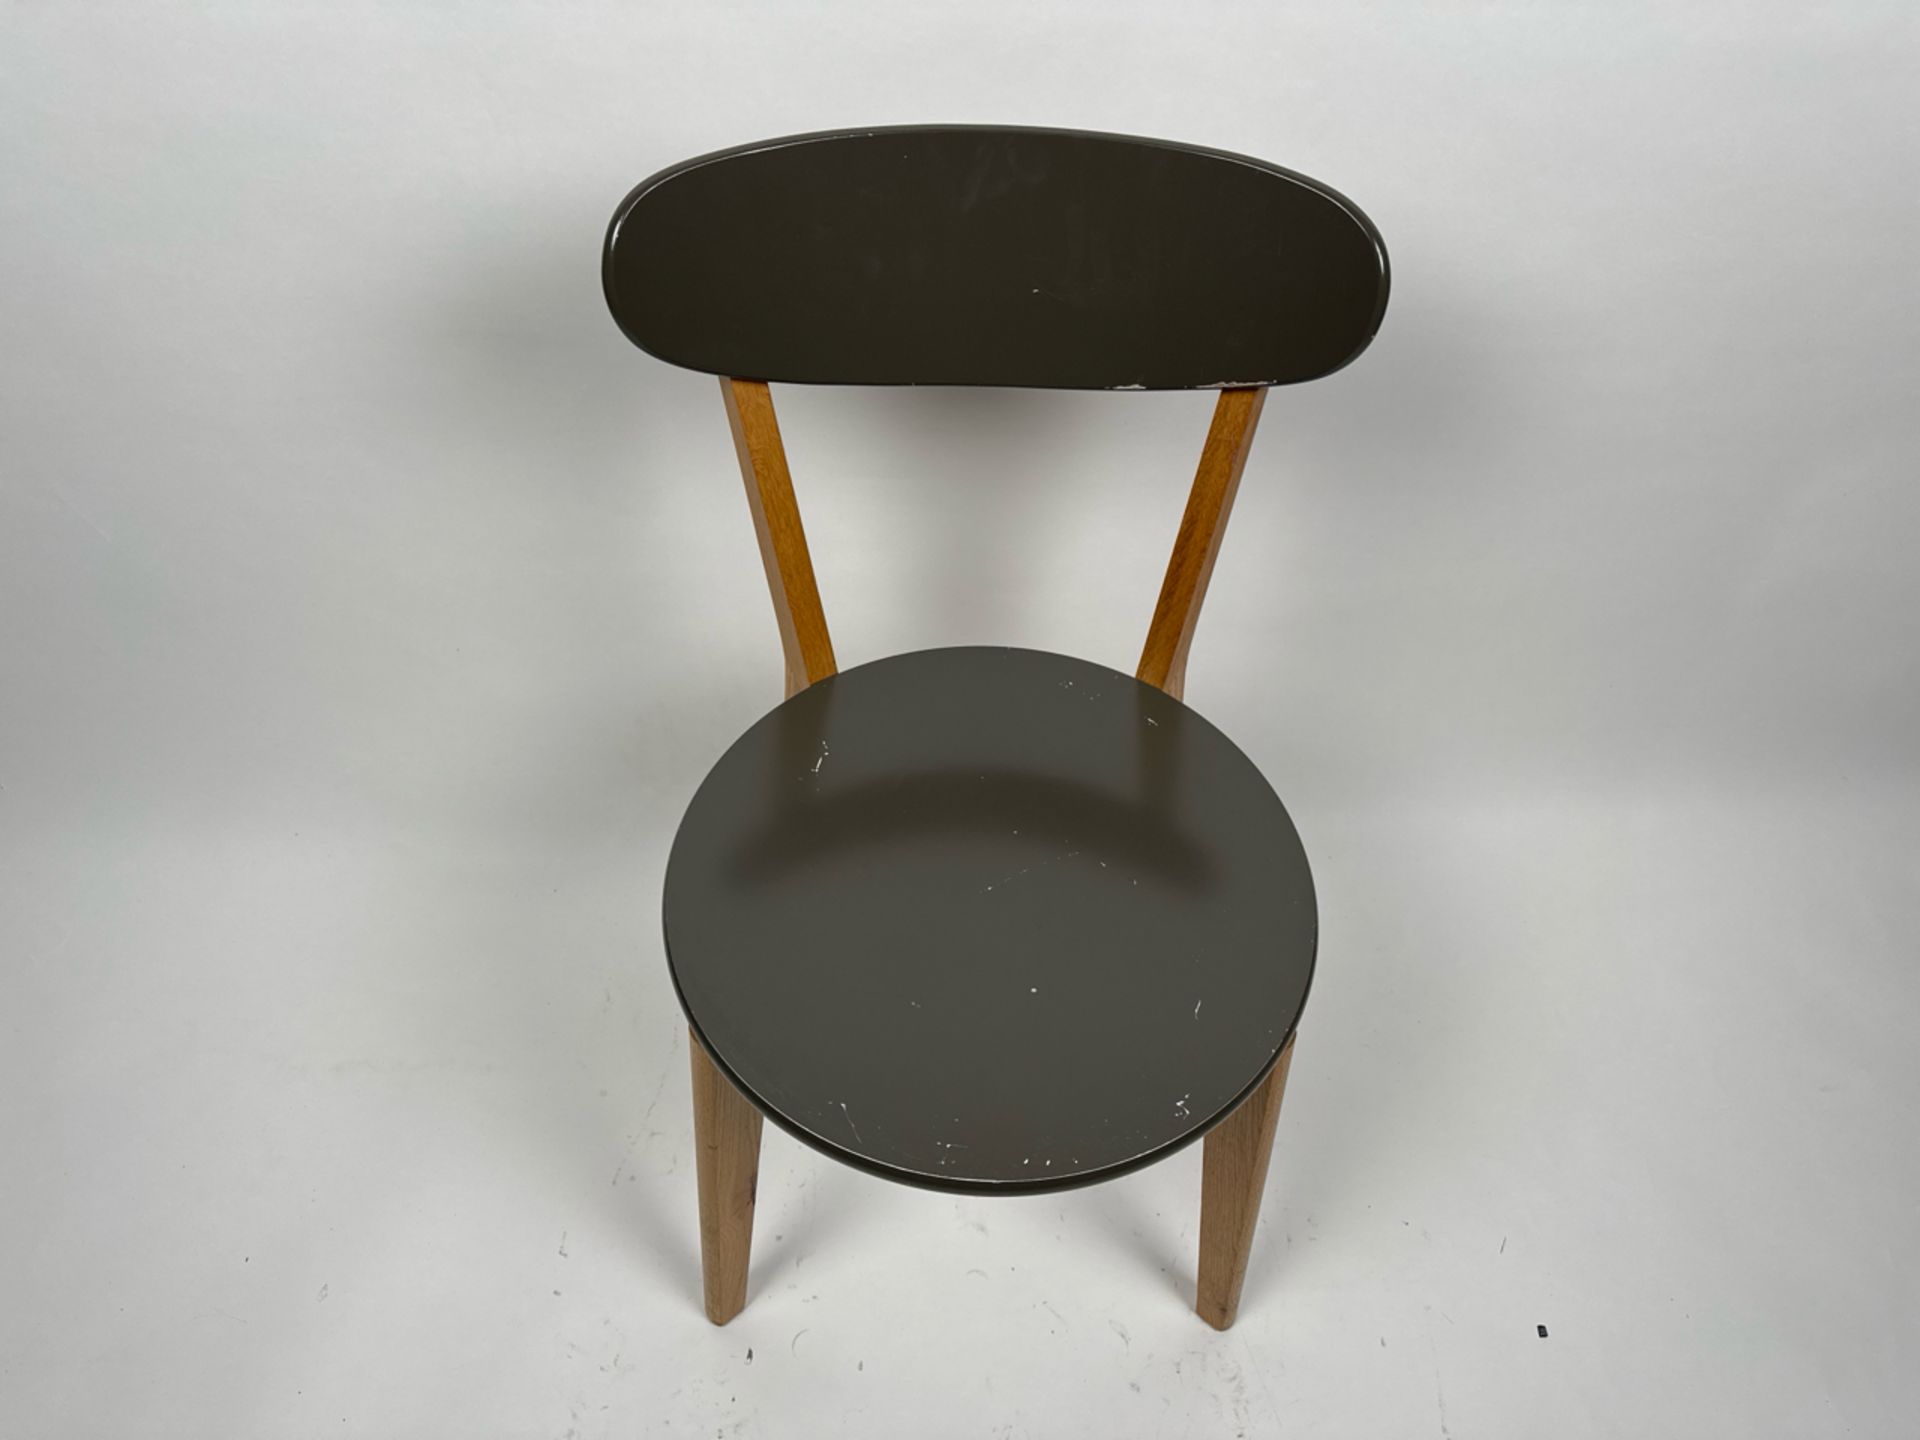 Amara Swedish Style Dining Chair - Image 2 of 3